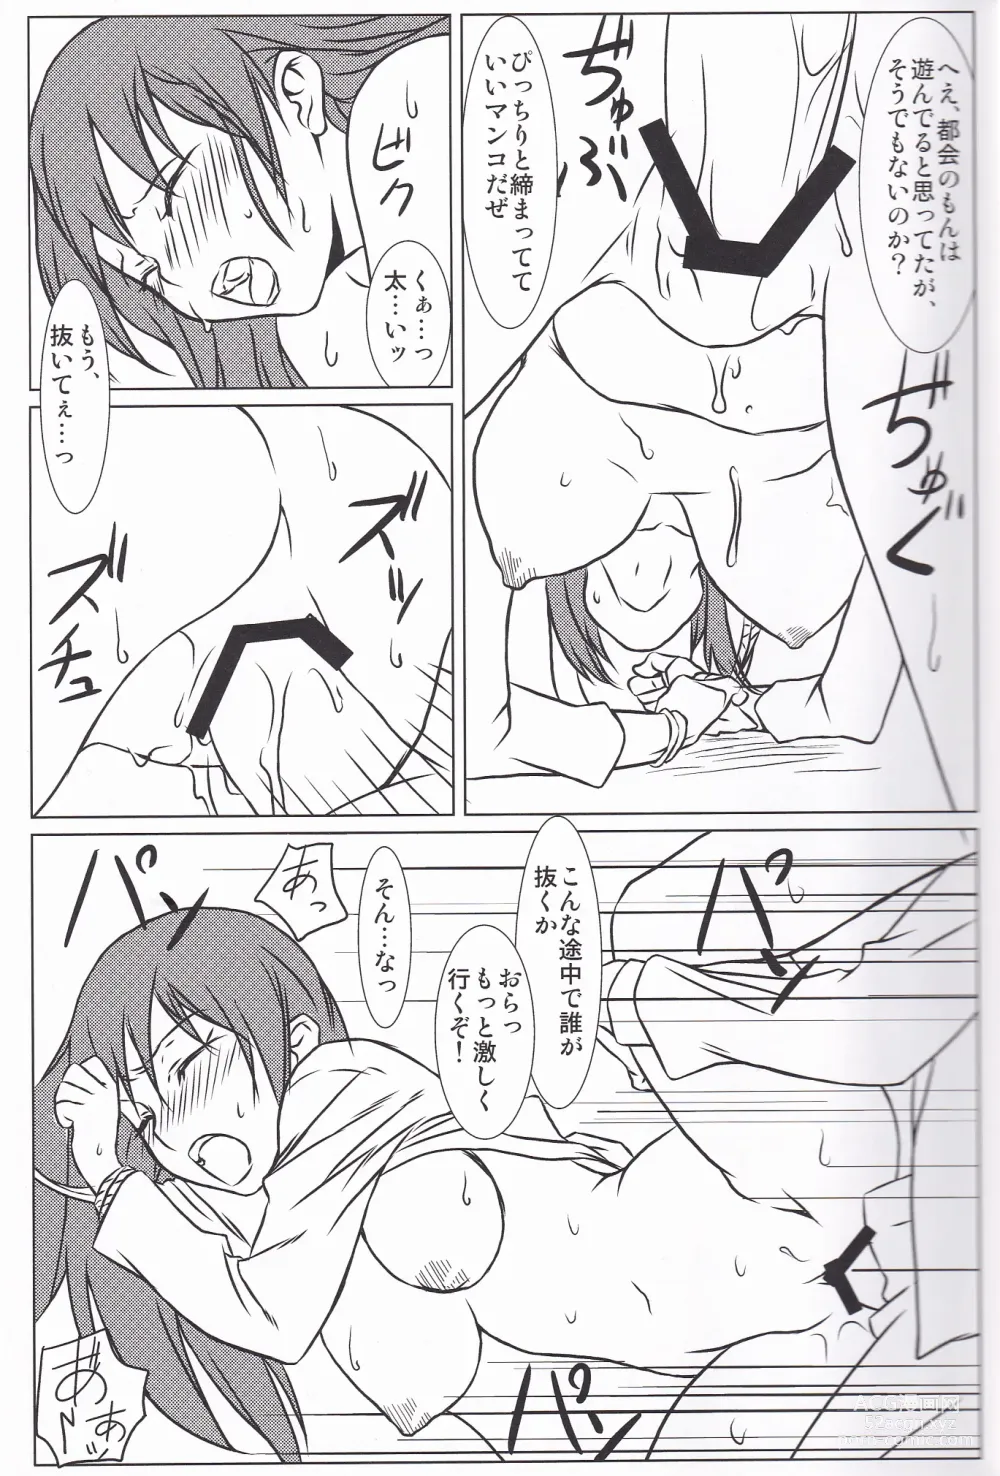 Page 12 of doujinshi Hibi no Uta